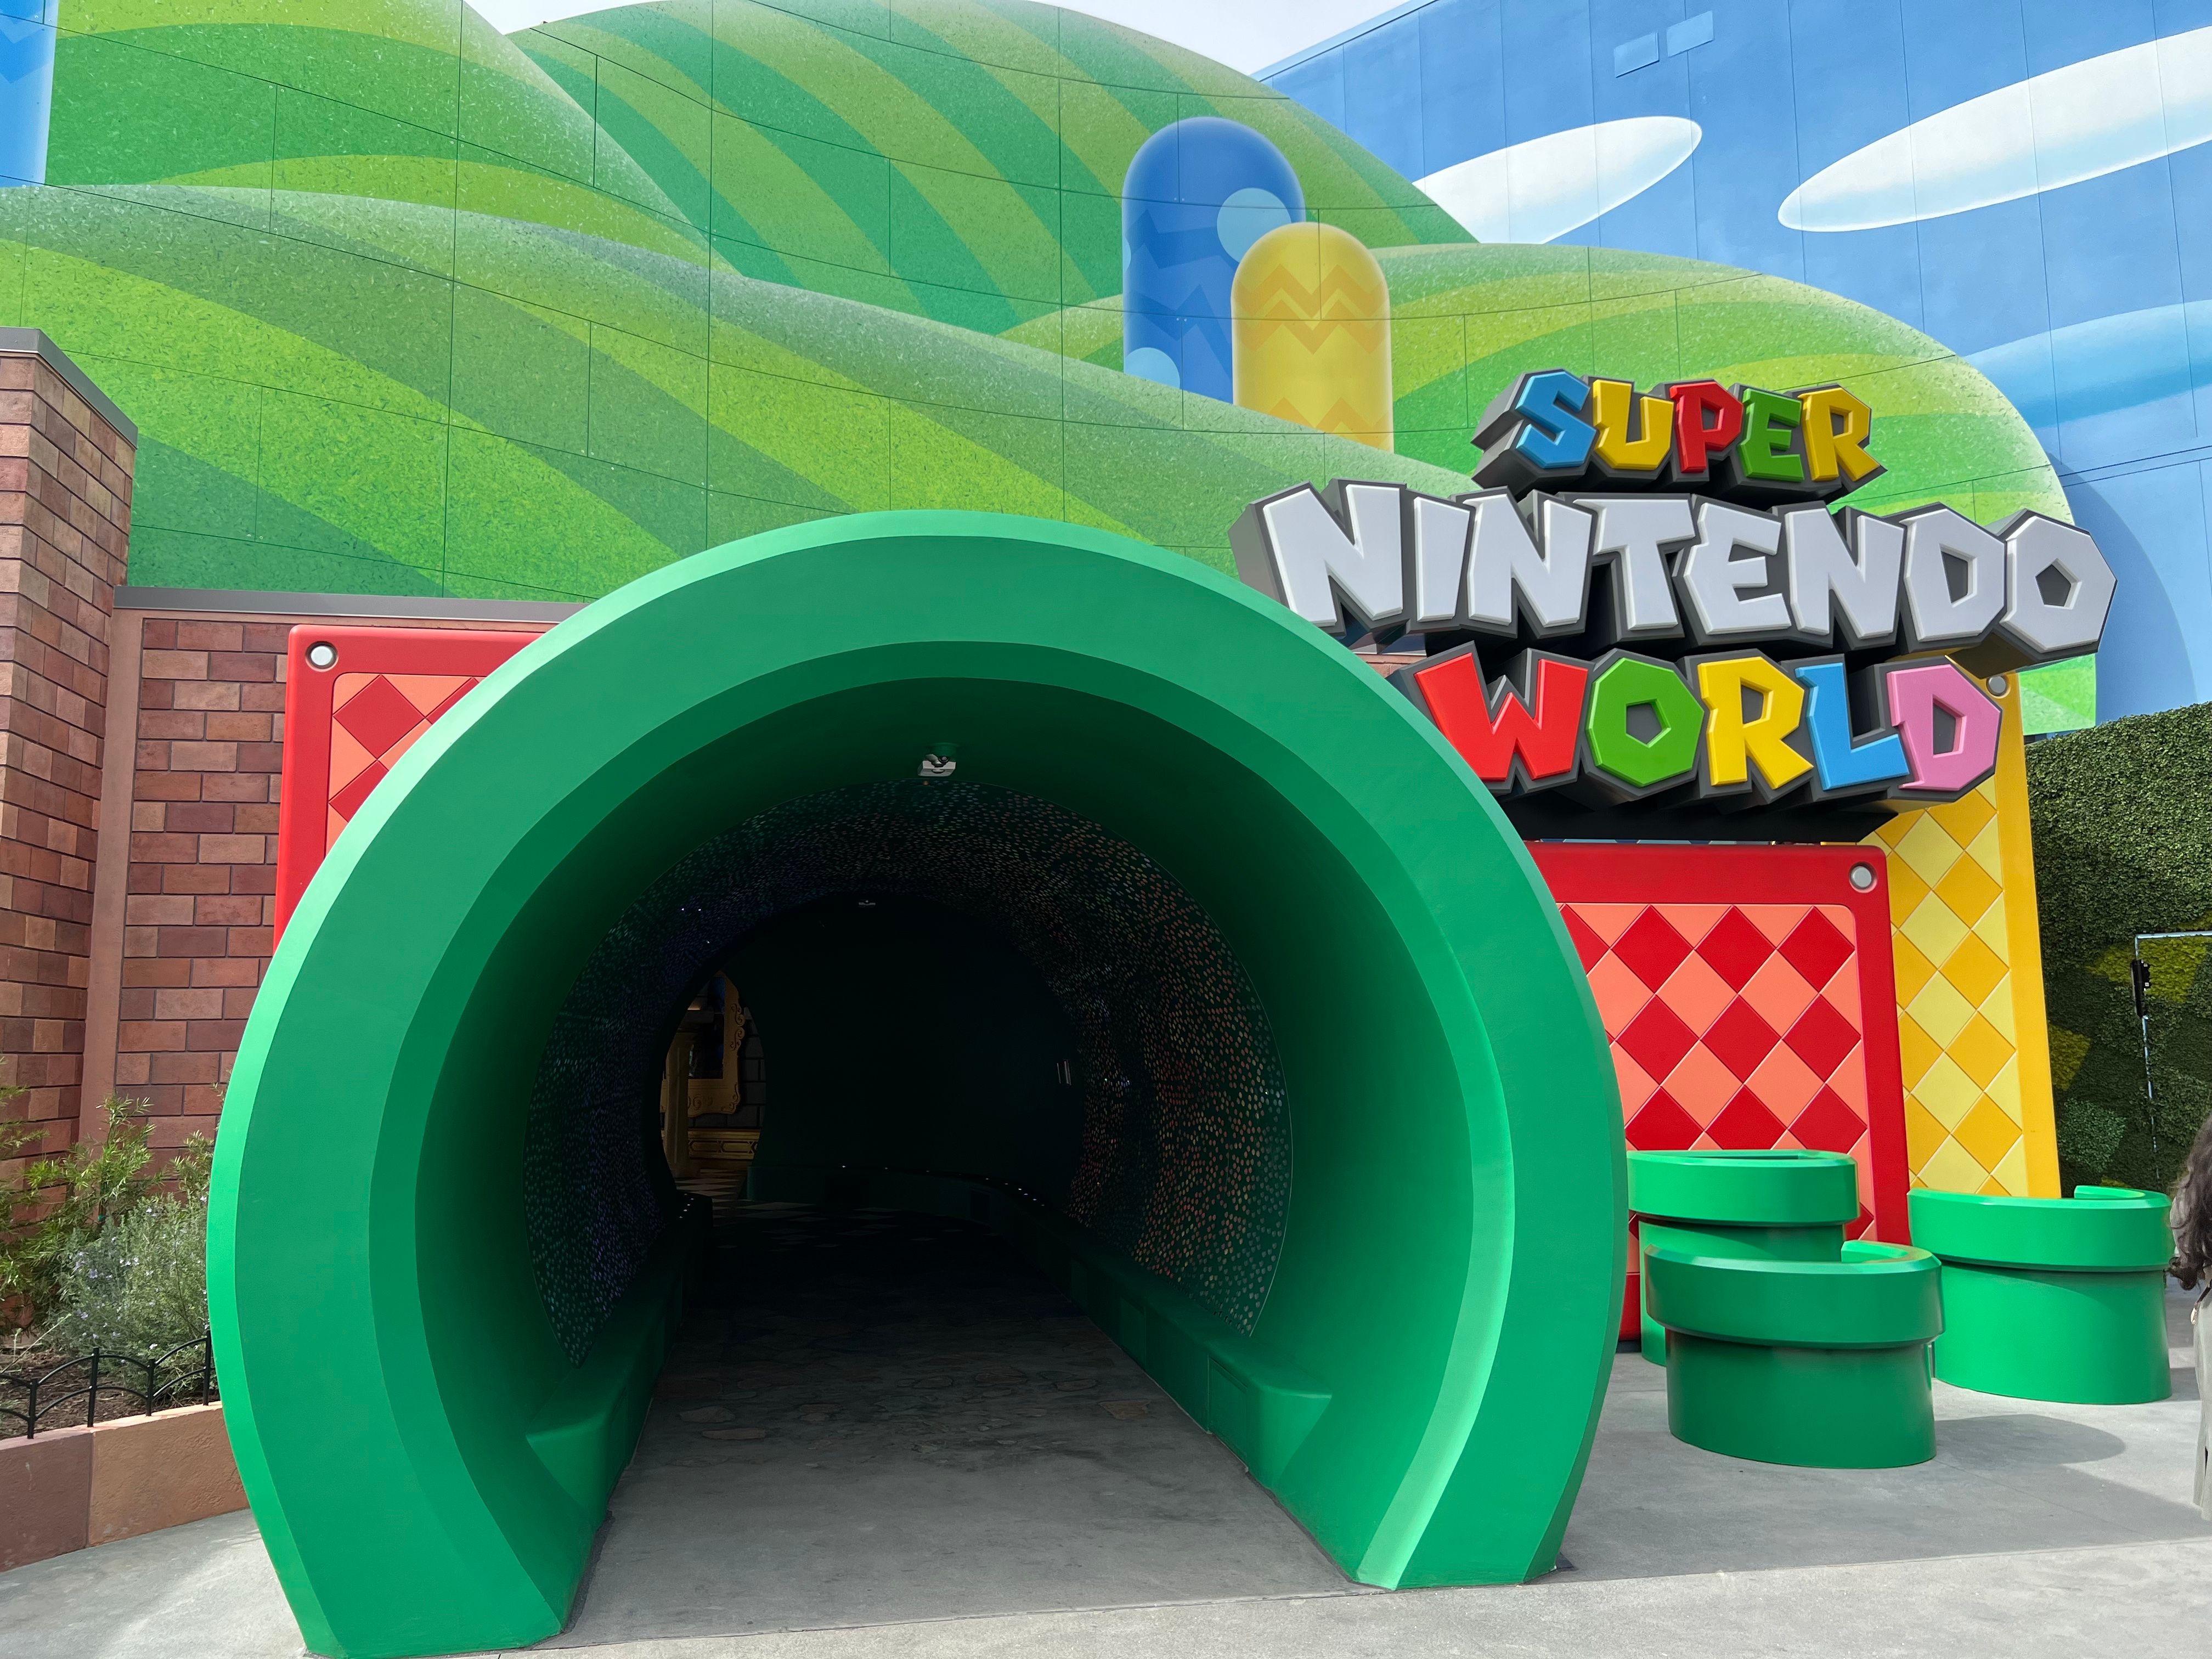 
Super Nintendo World Grand Opening
